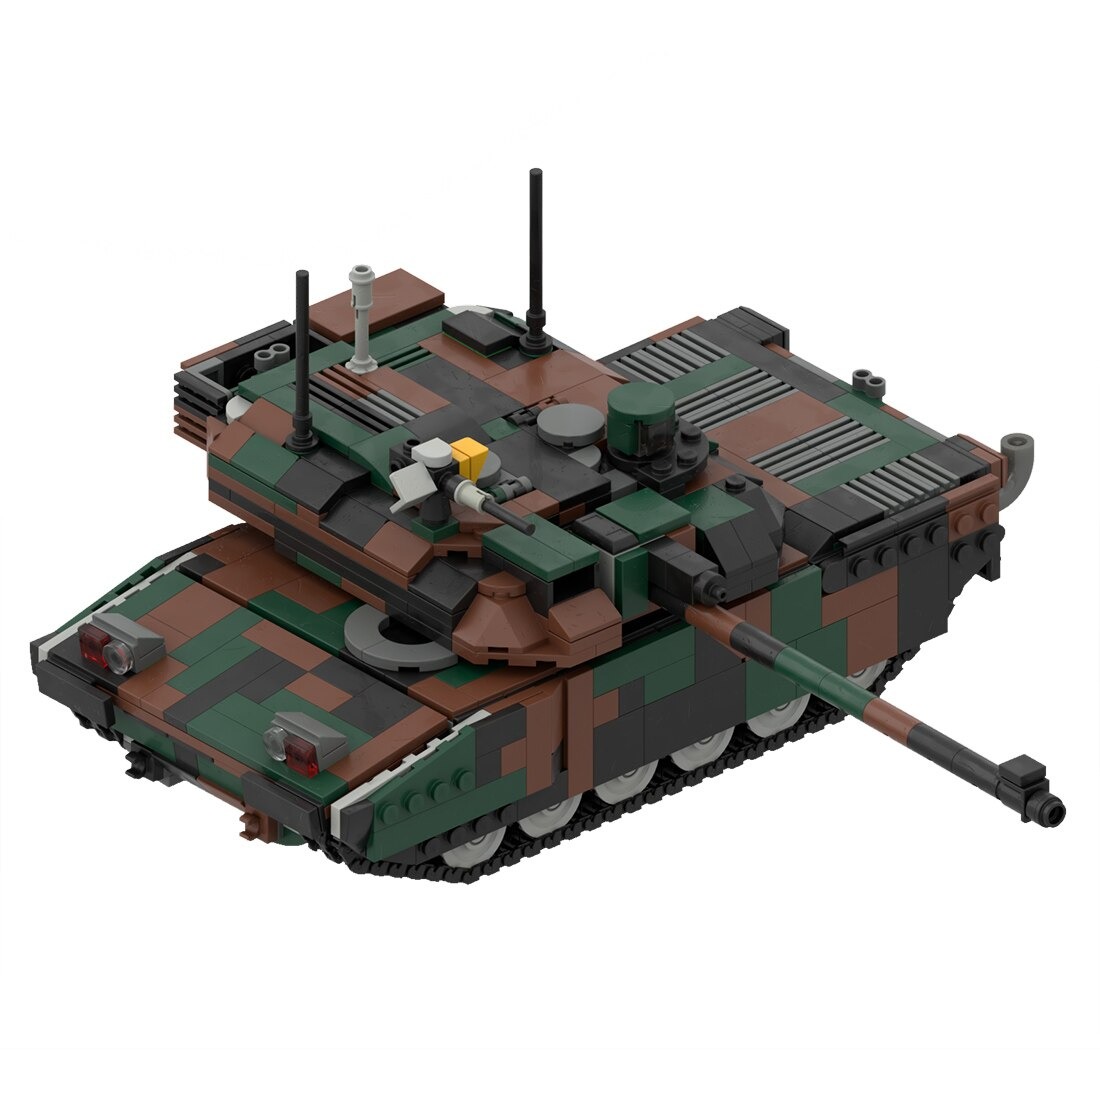 moc 34858 leclerc main battle tank model main 2 - KAZI Block